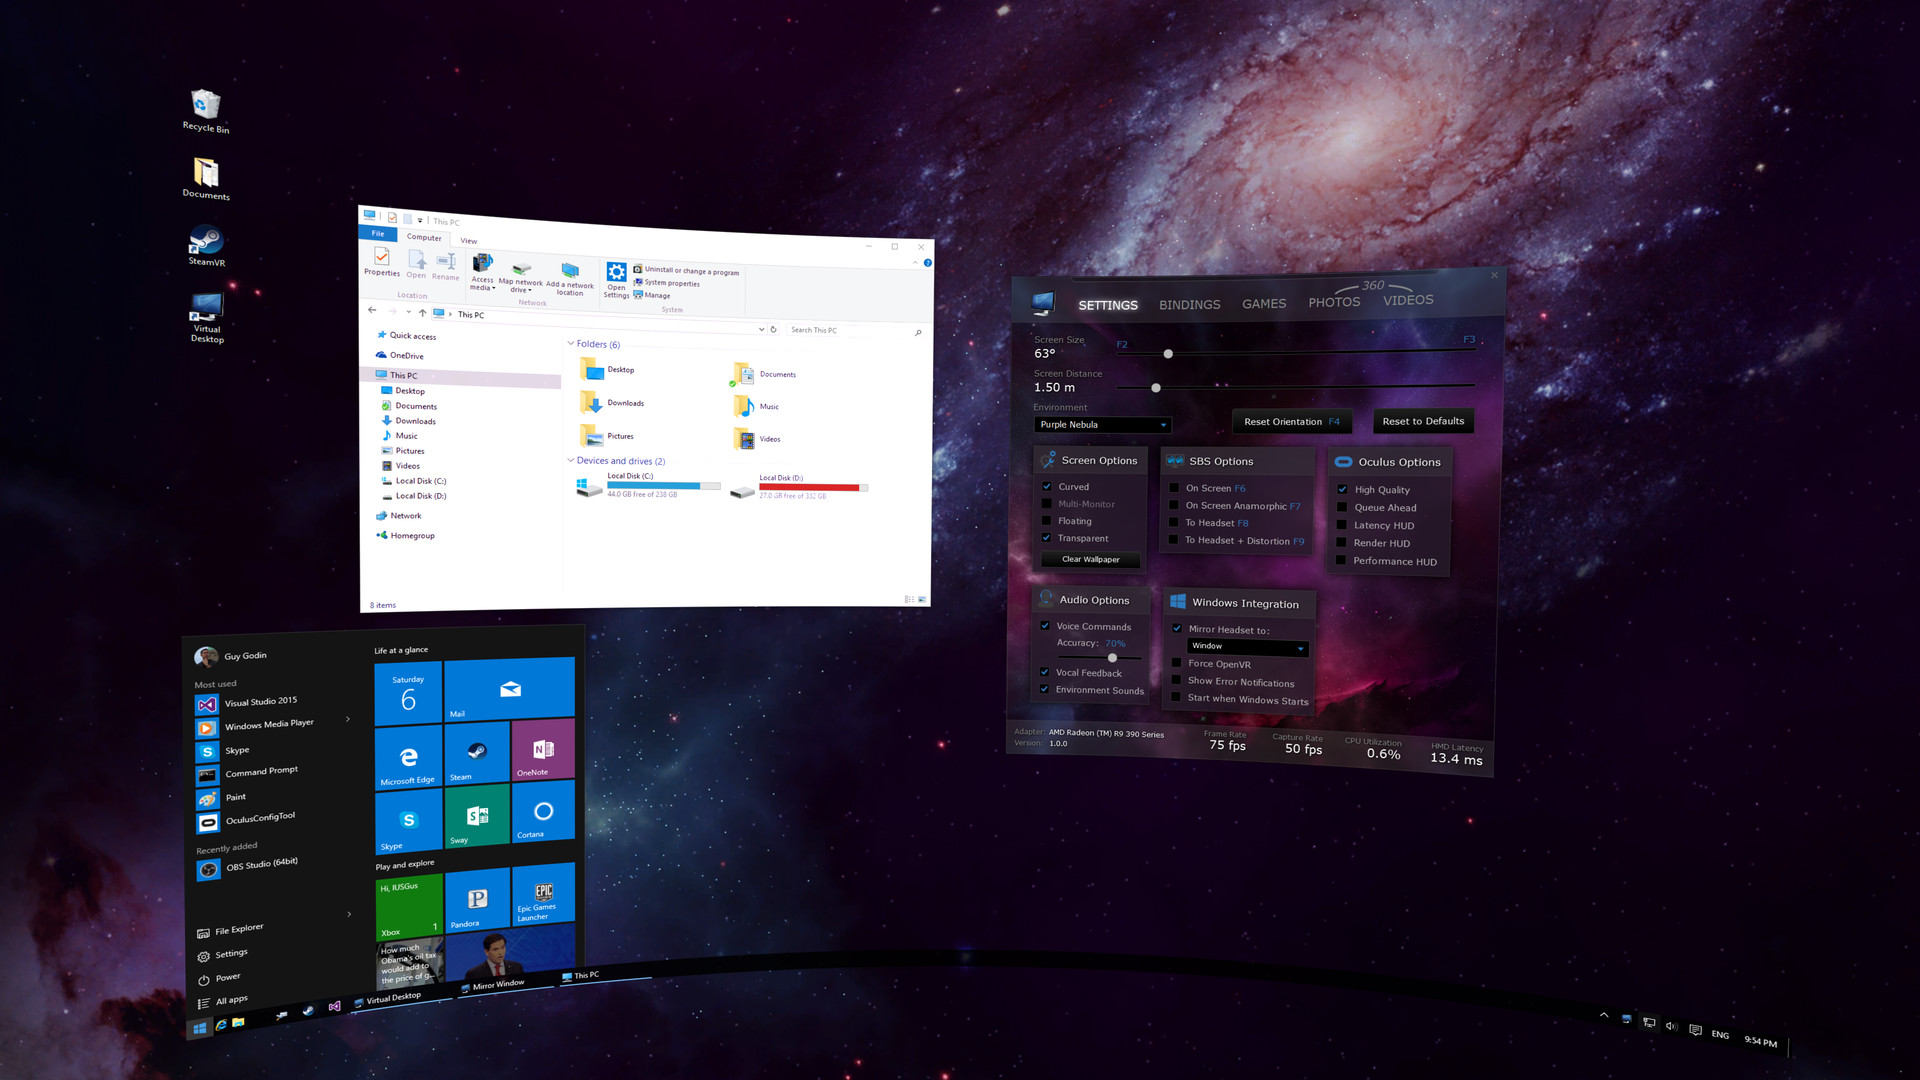 steam vr virtual desktop